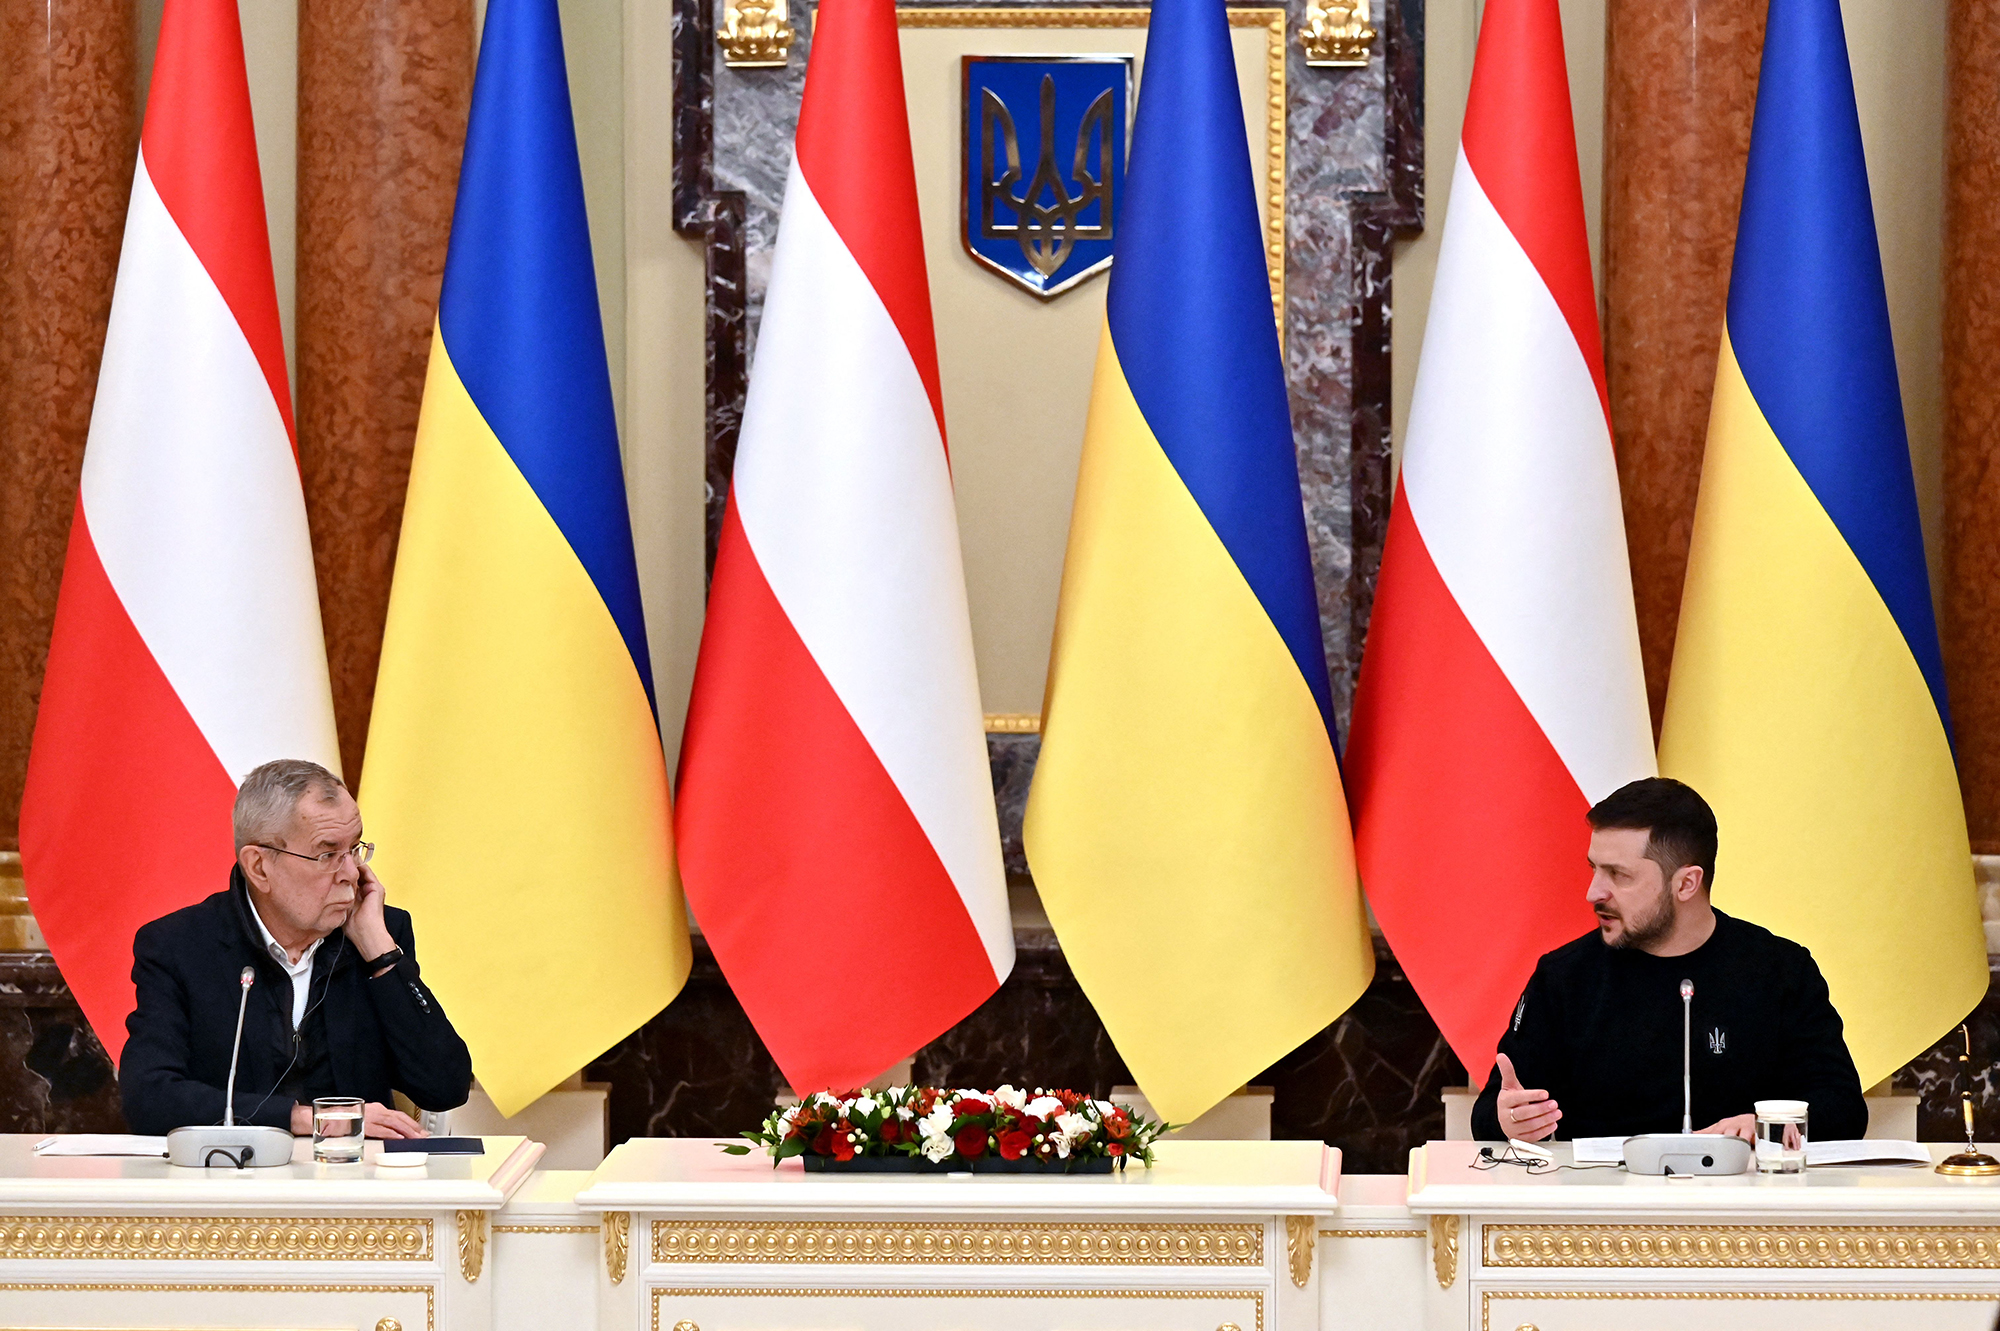 Ukrainian President Volodymyr Zelensky, right, and his Austrian counterpart Alexander Van der Bellen hold a joint press conference following their talks in Kyiv, Ukraine, on February 1.